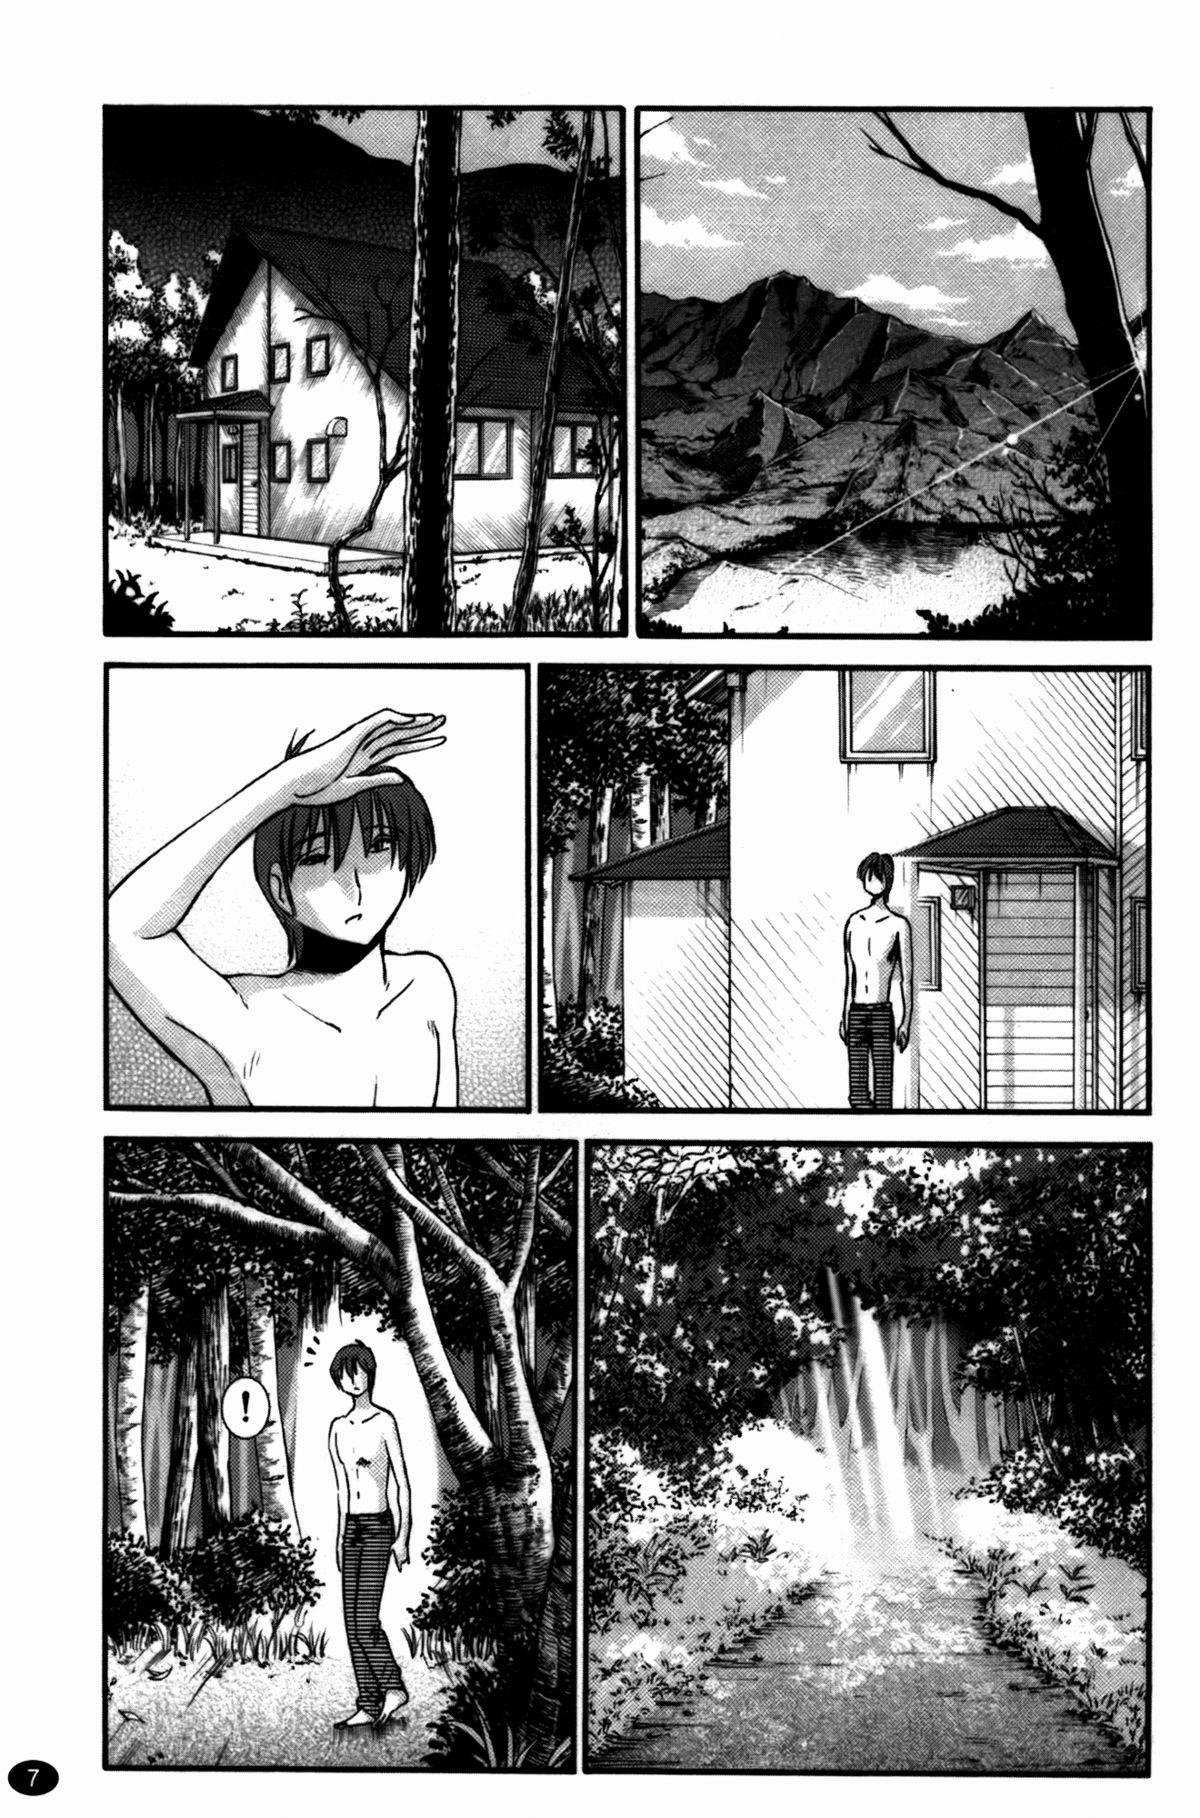 Mommy Monokage no Irisu Volume 3 Chapter 17 Titties - Page 8